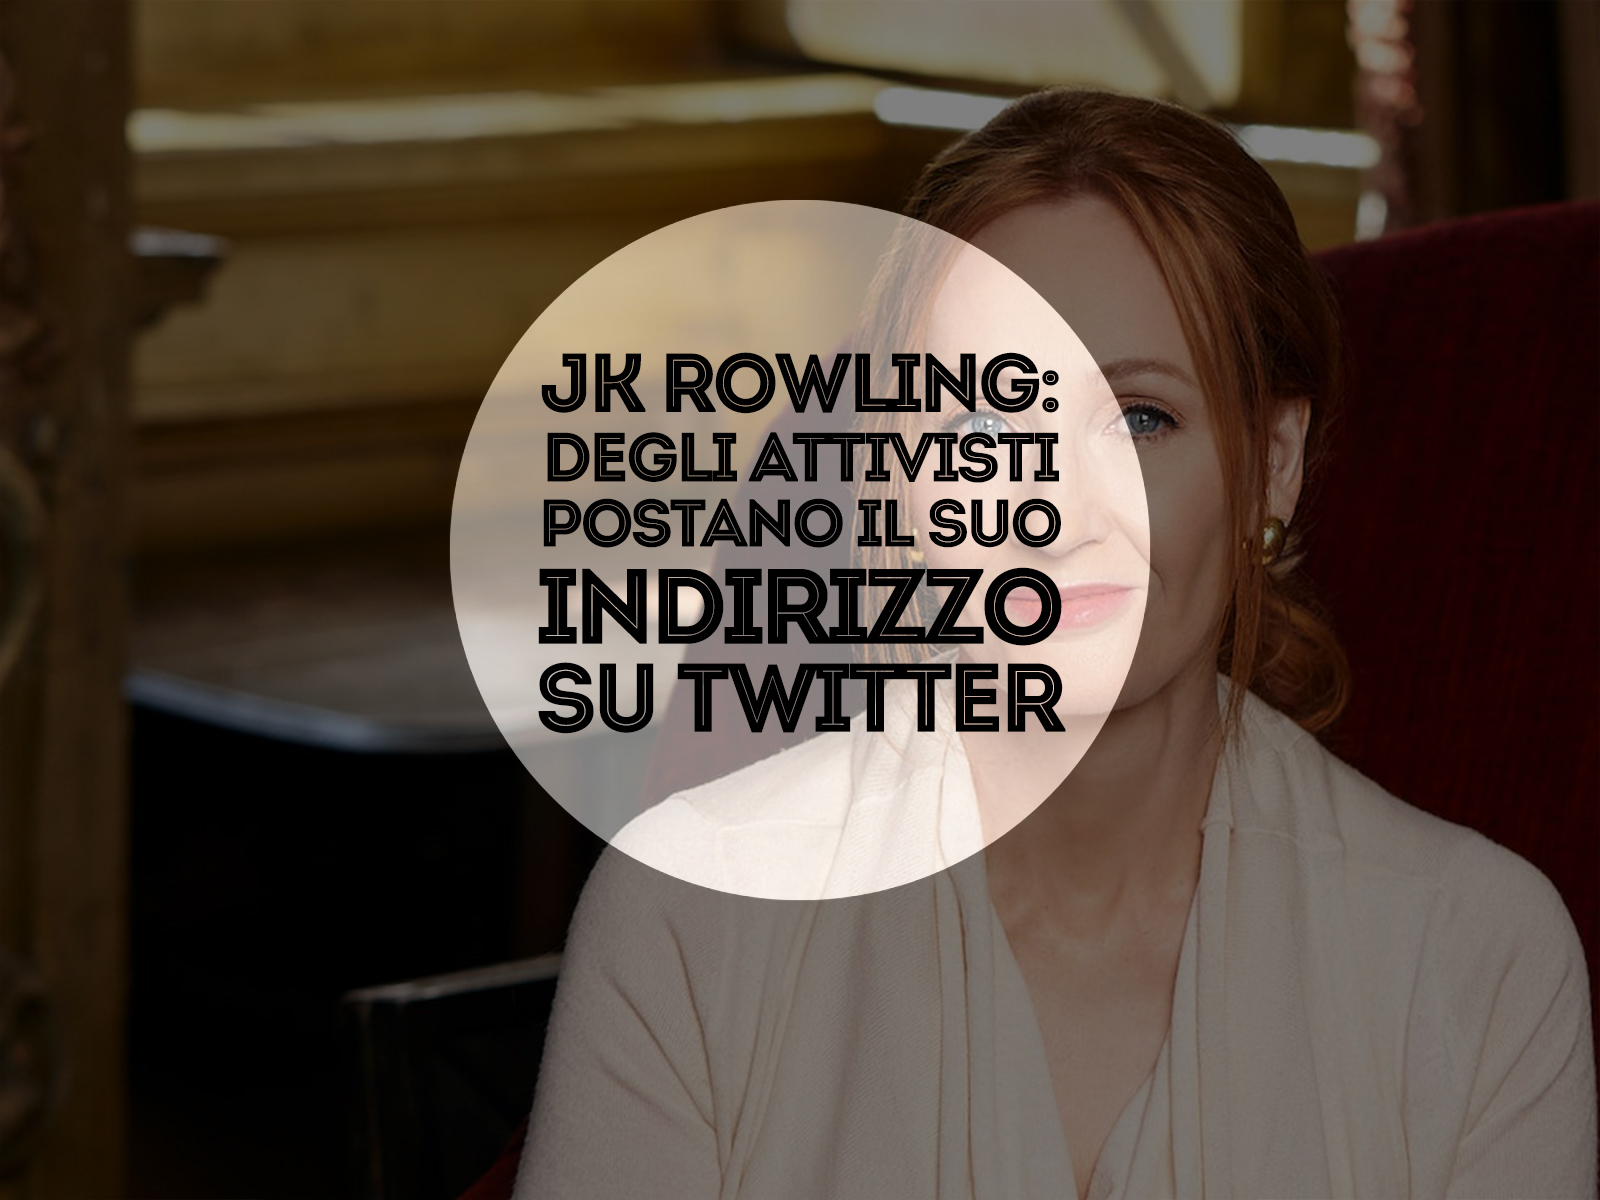 JK Rowling: indirizzo postato su Twitter